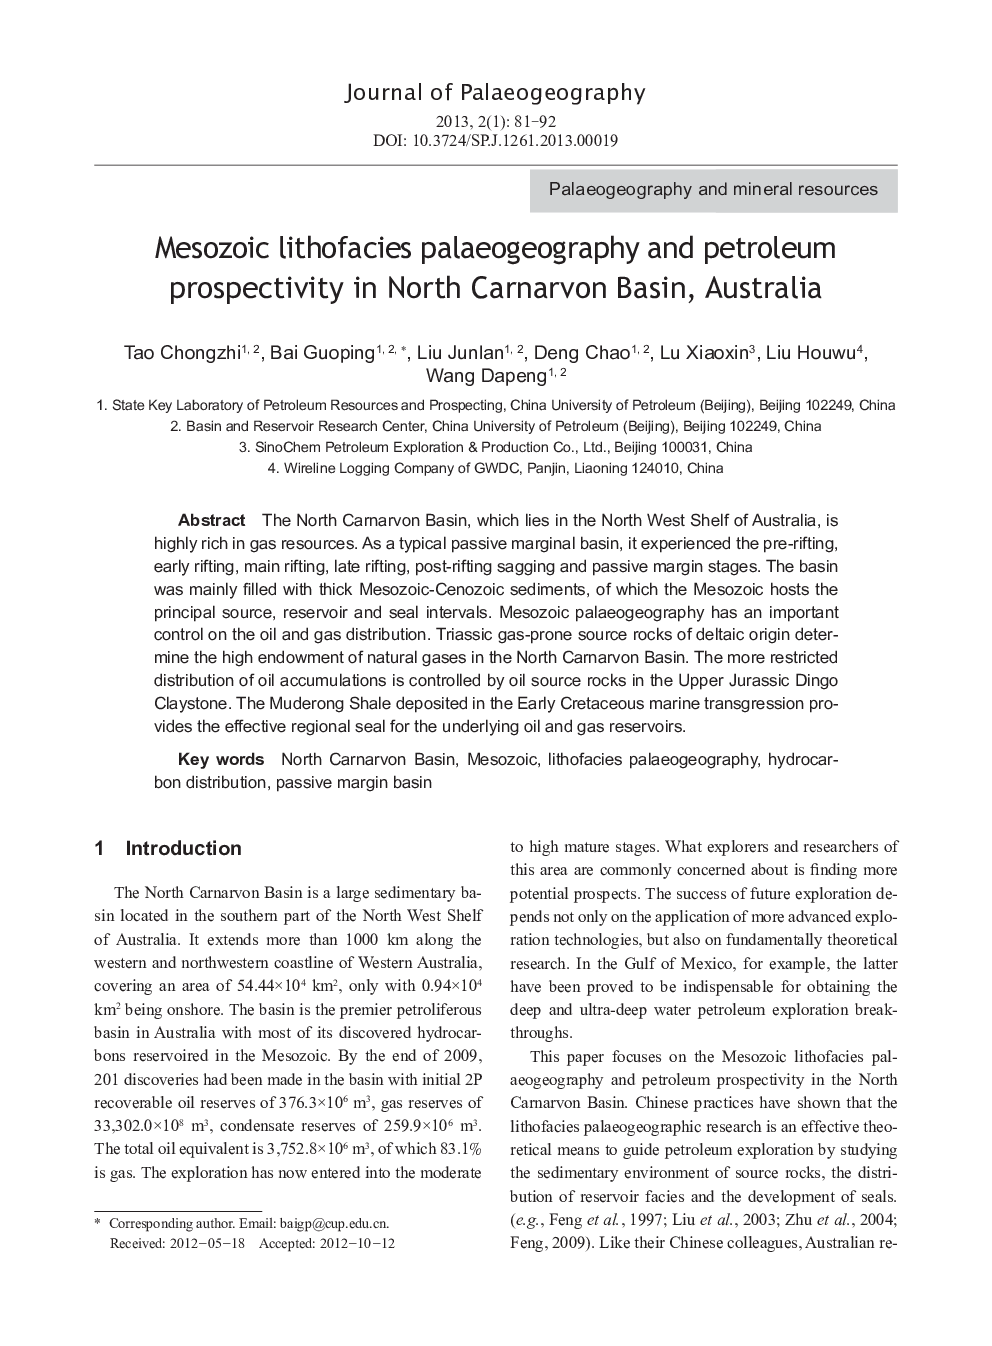 Mesozoic lithofacies palaeogeography and petroleum prospectivity in North Carnarvon Basin, Australia